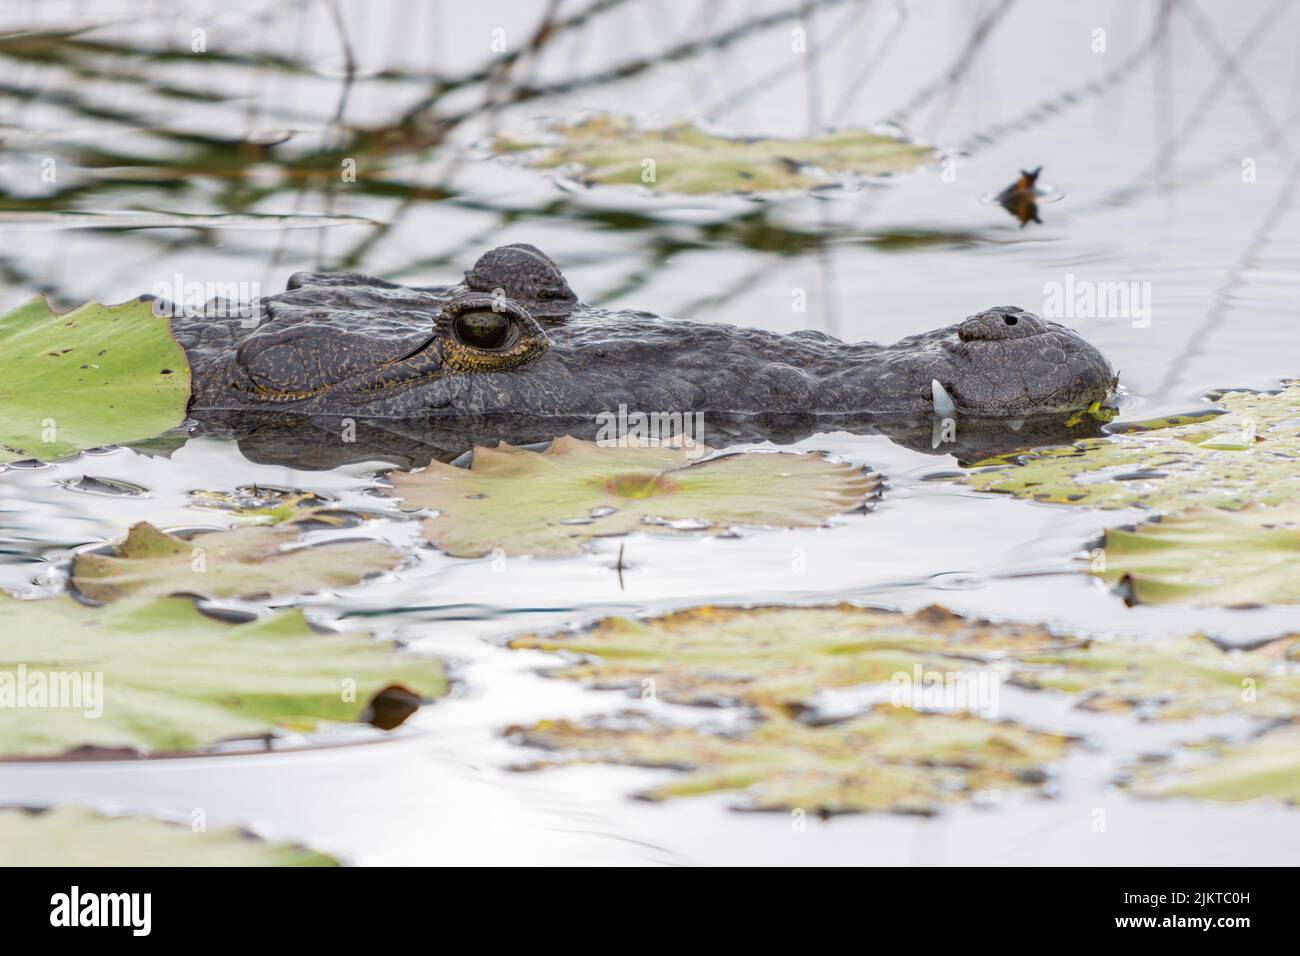 Closeup shot of Morelet's crocodile, also known as the Mexican crocodile or Belize crocodile Stock Photo